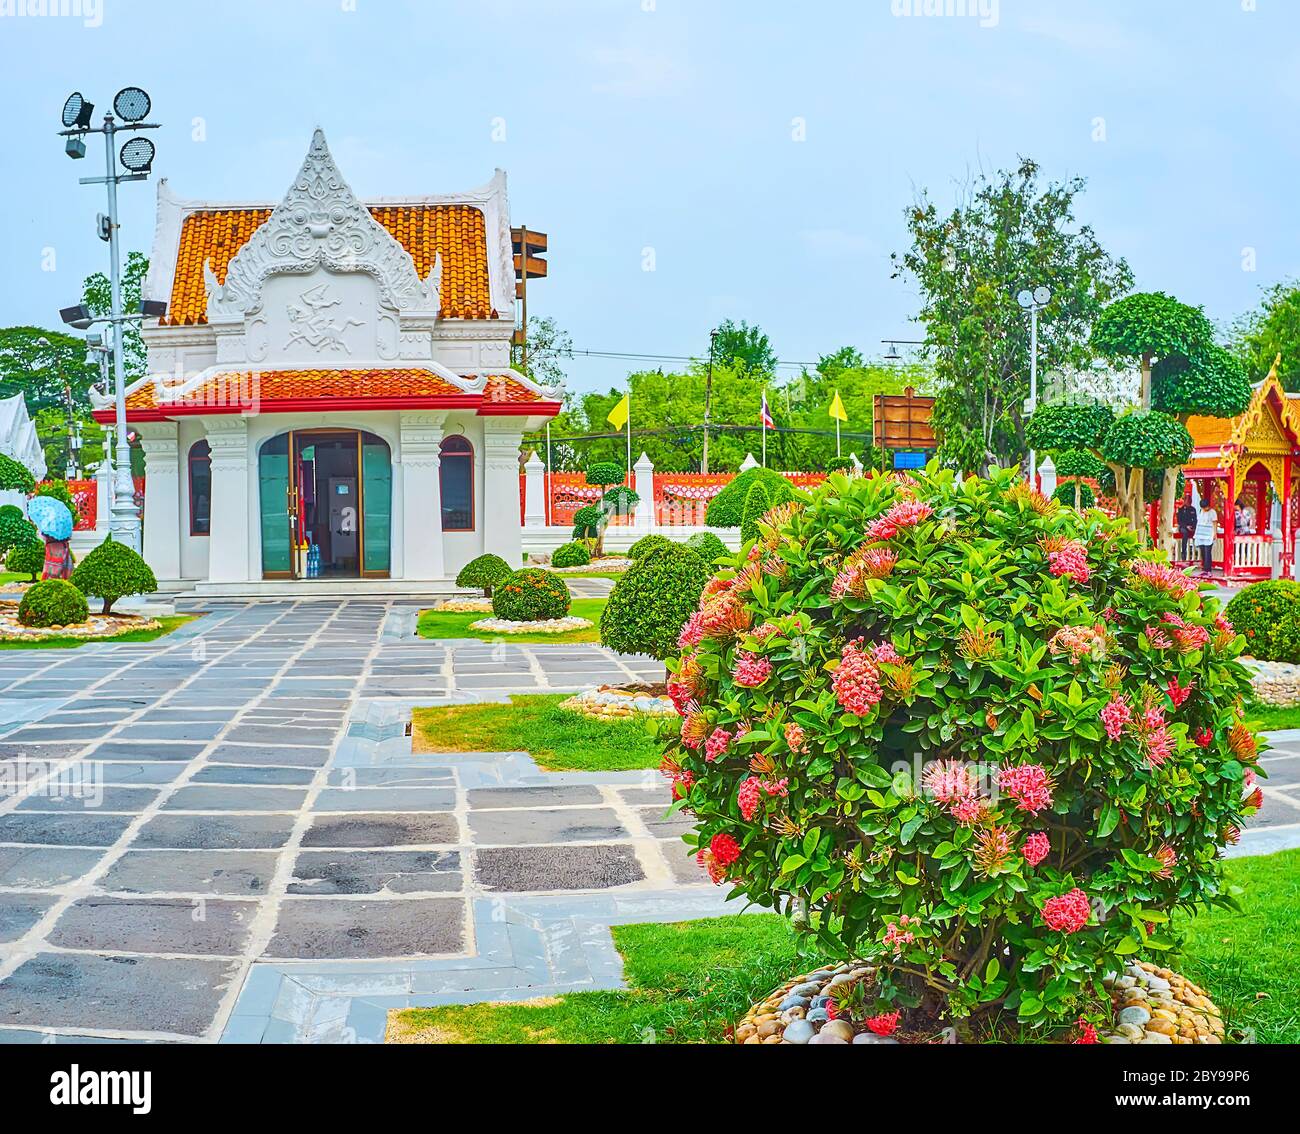 The scenic white pavilion in topiary garden of Wat Benchamabophit Dusitvanaram Marble Temple, Bangkok, Thailand Stock Photo